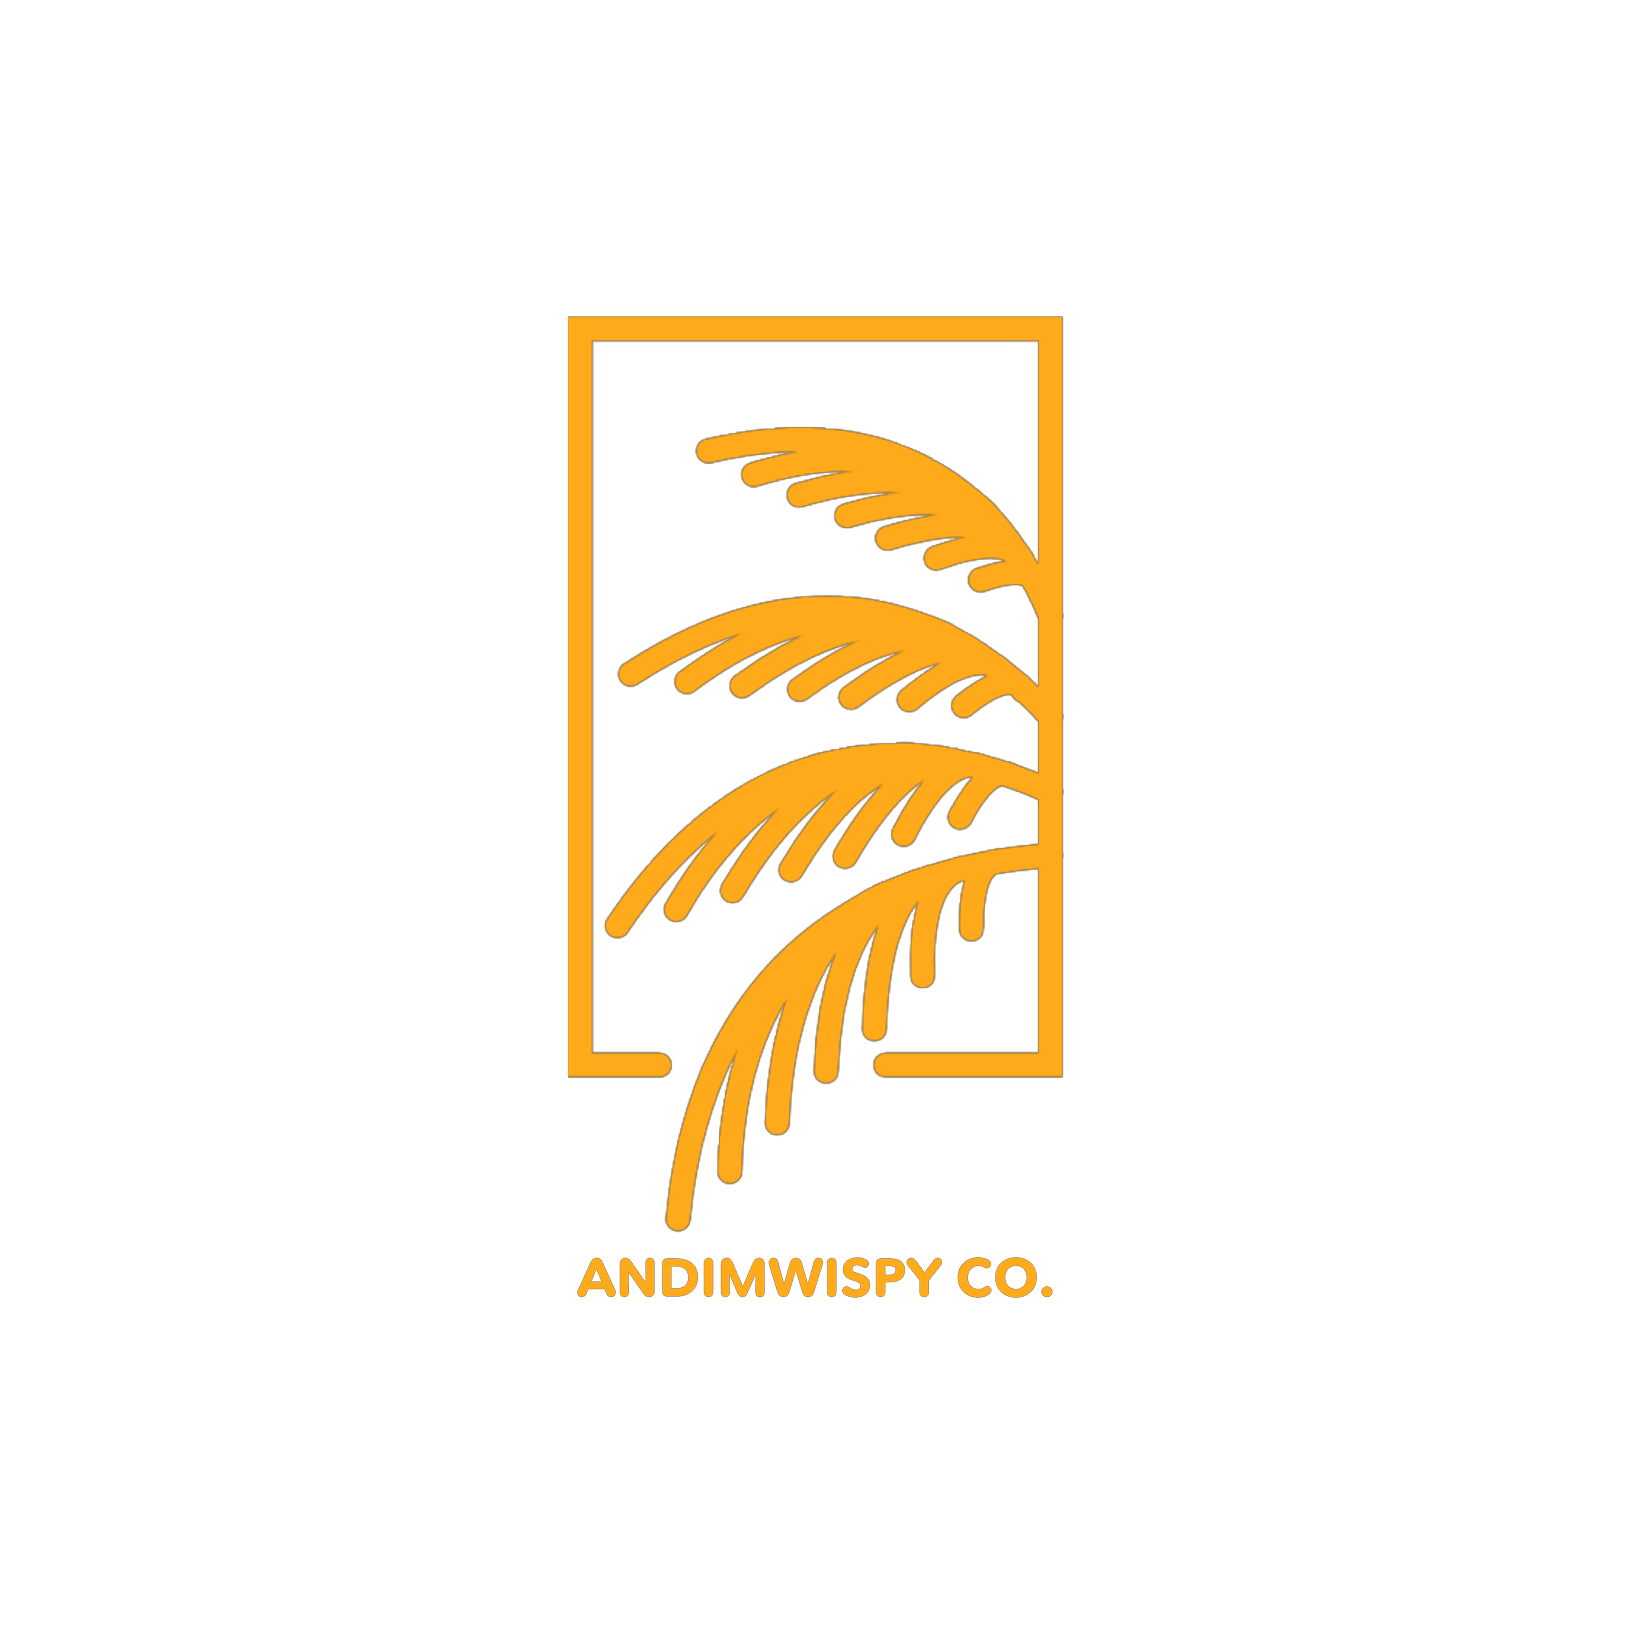 Andimwispy Co.